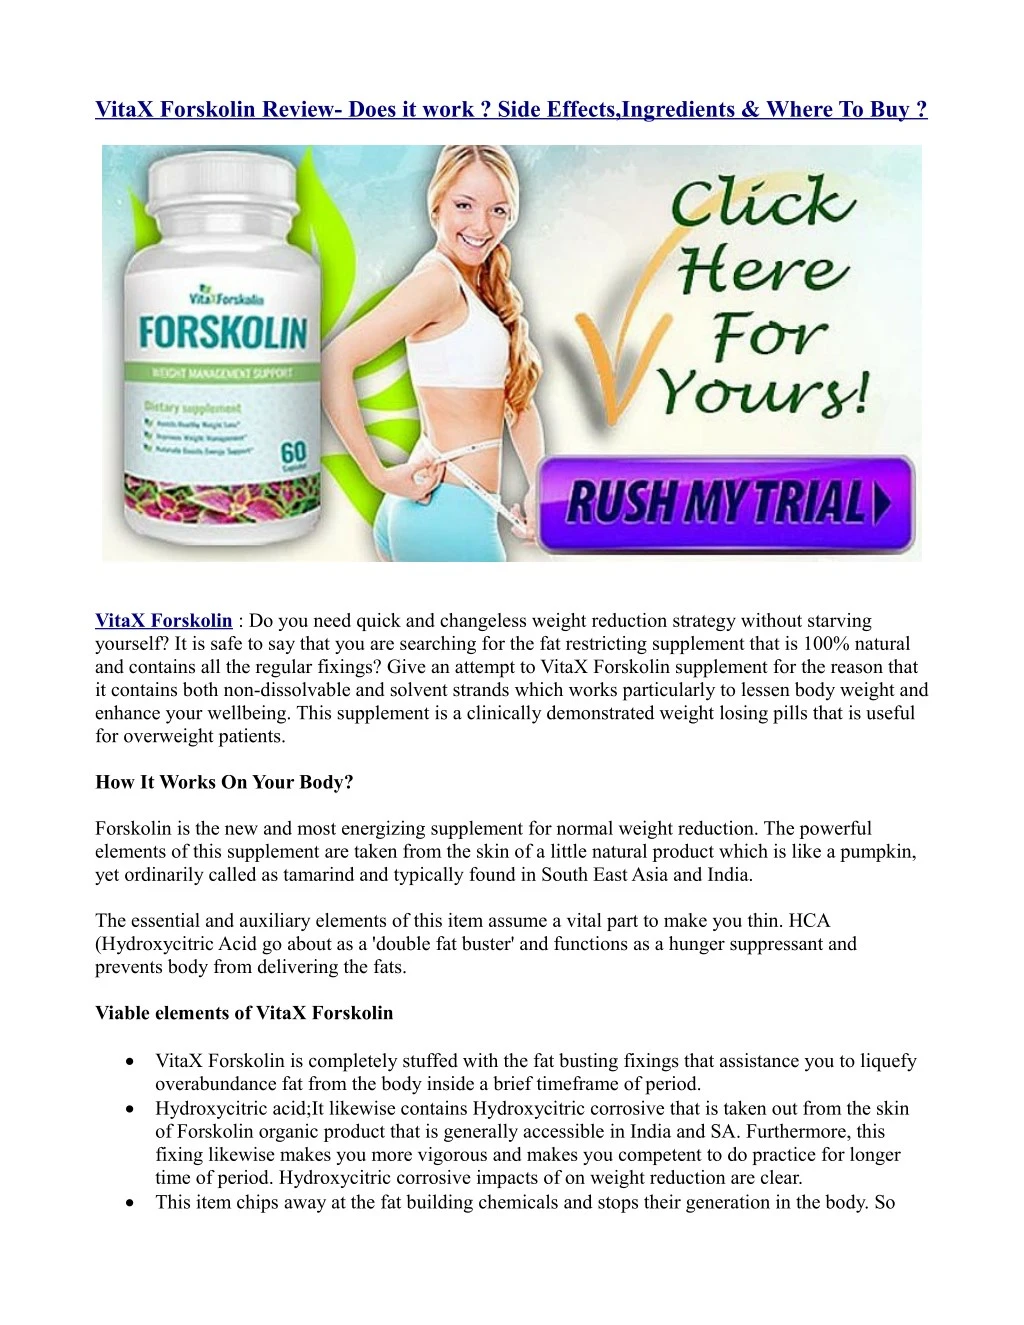 vitax forskolin review does it work side effects